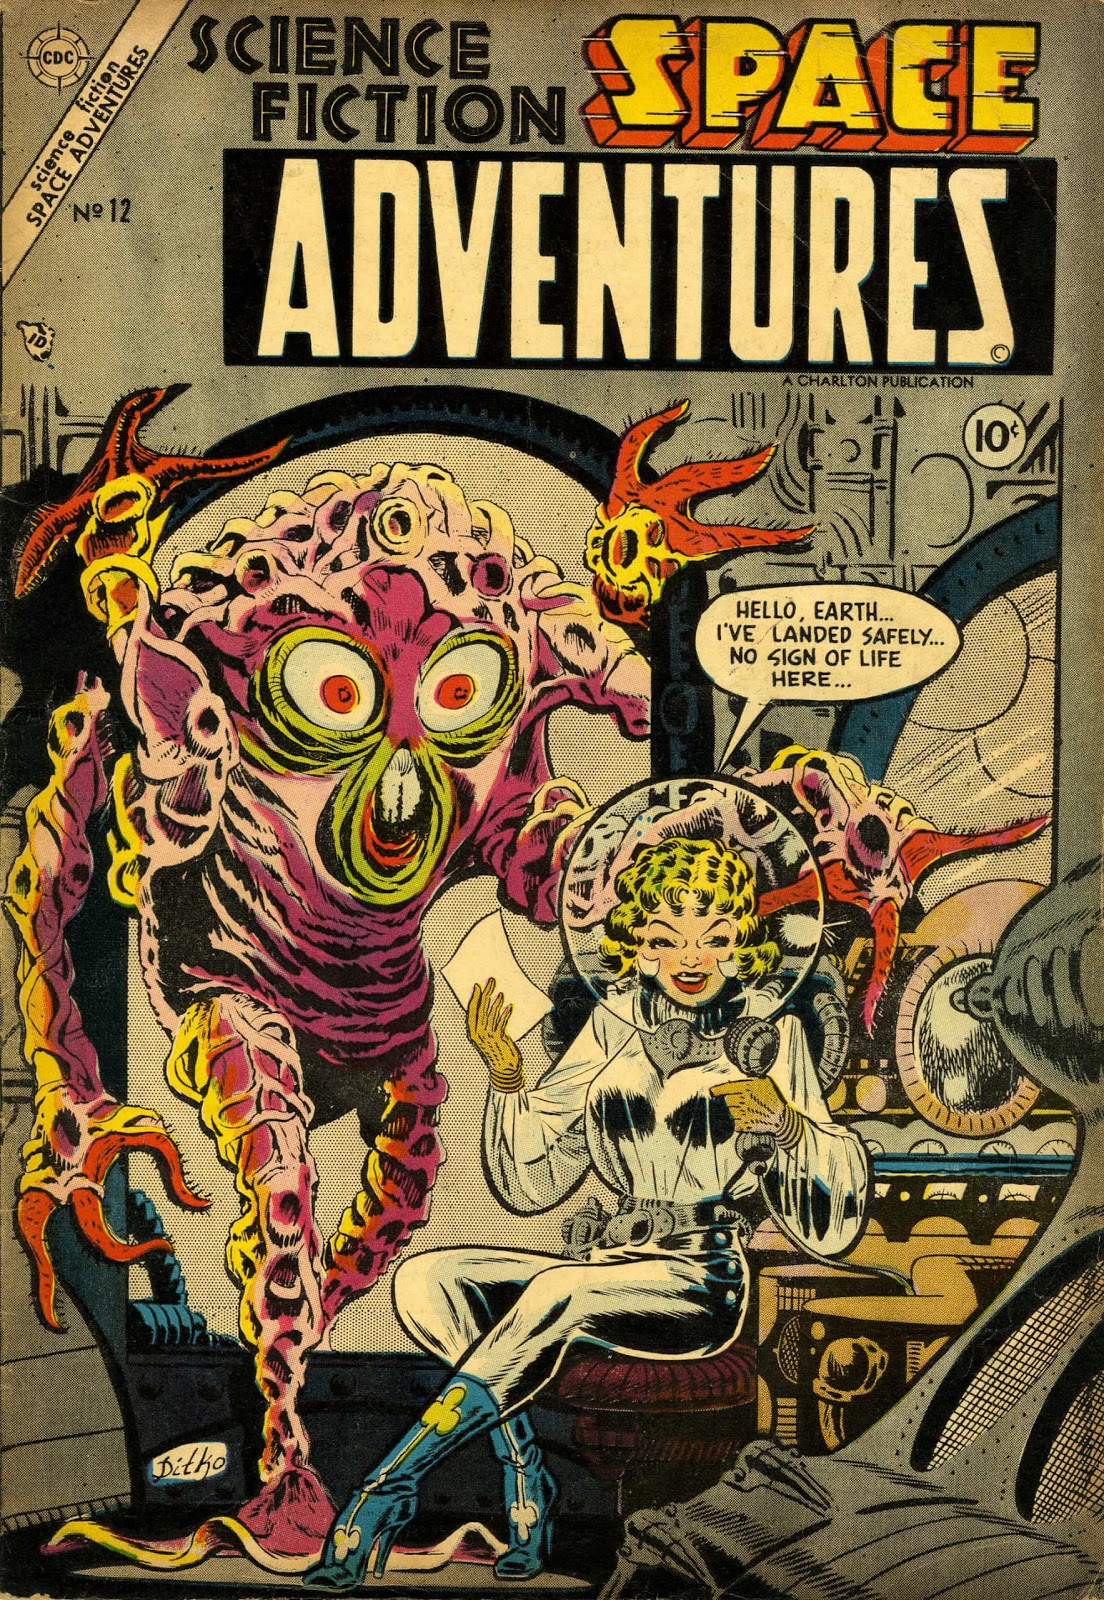 Cap'n's Comics: Some Spacey Steve Ditko